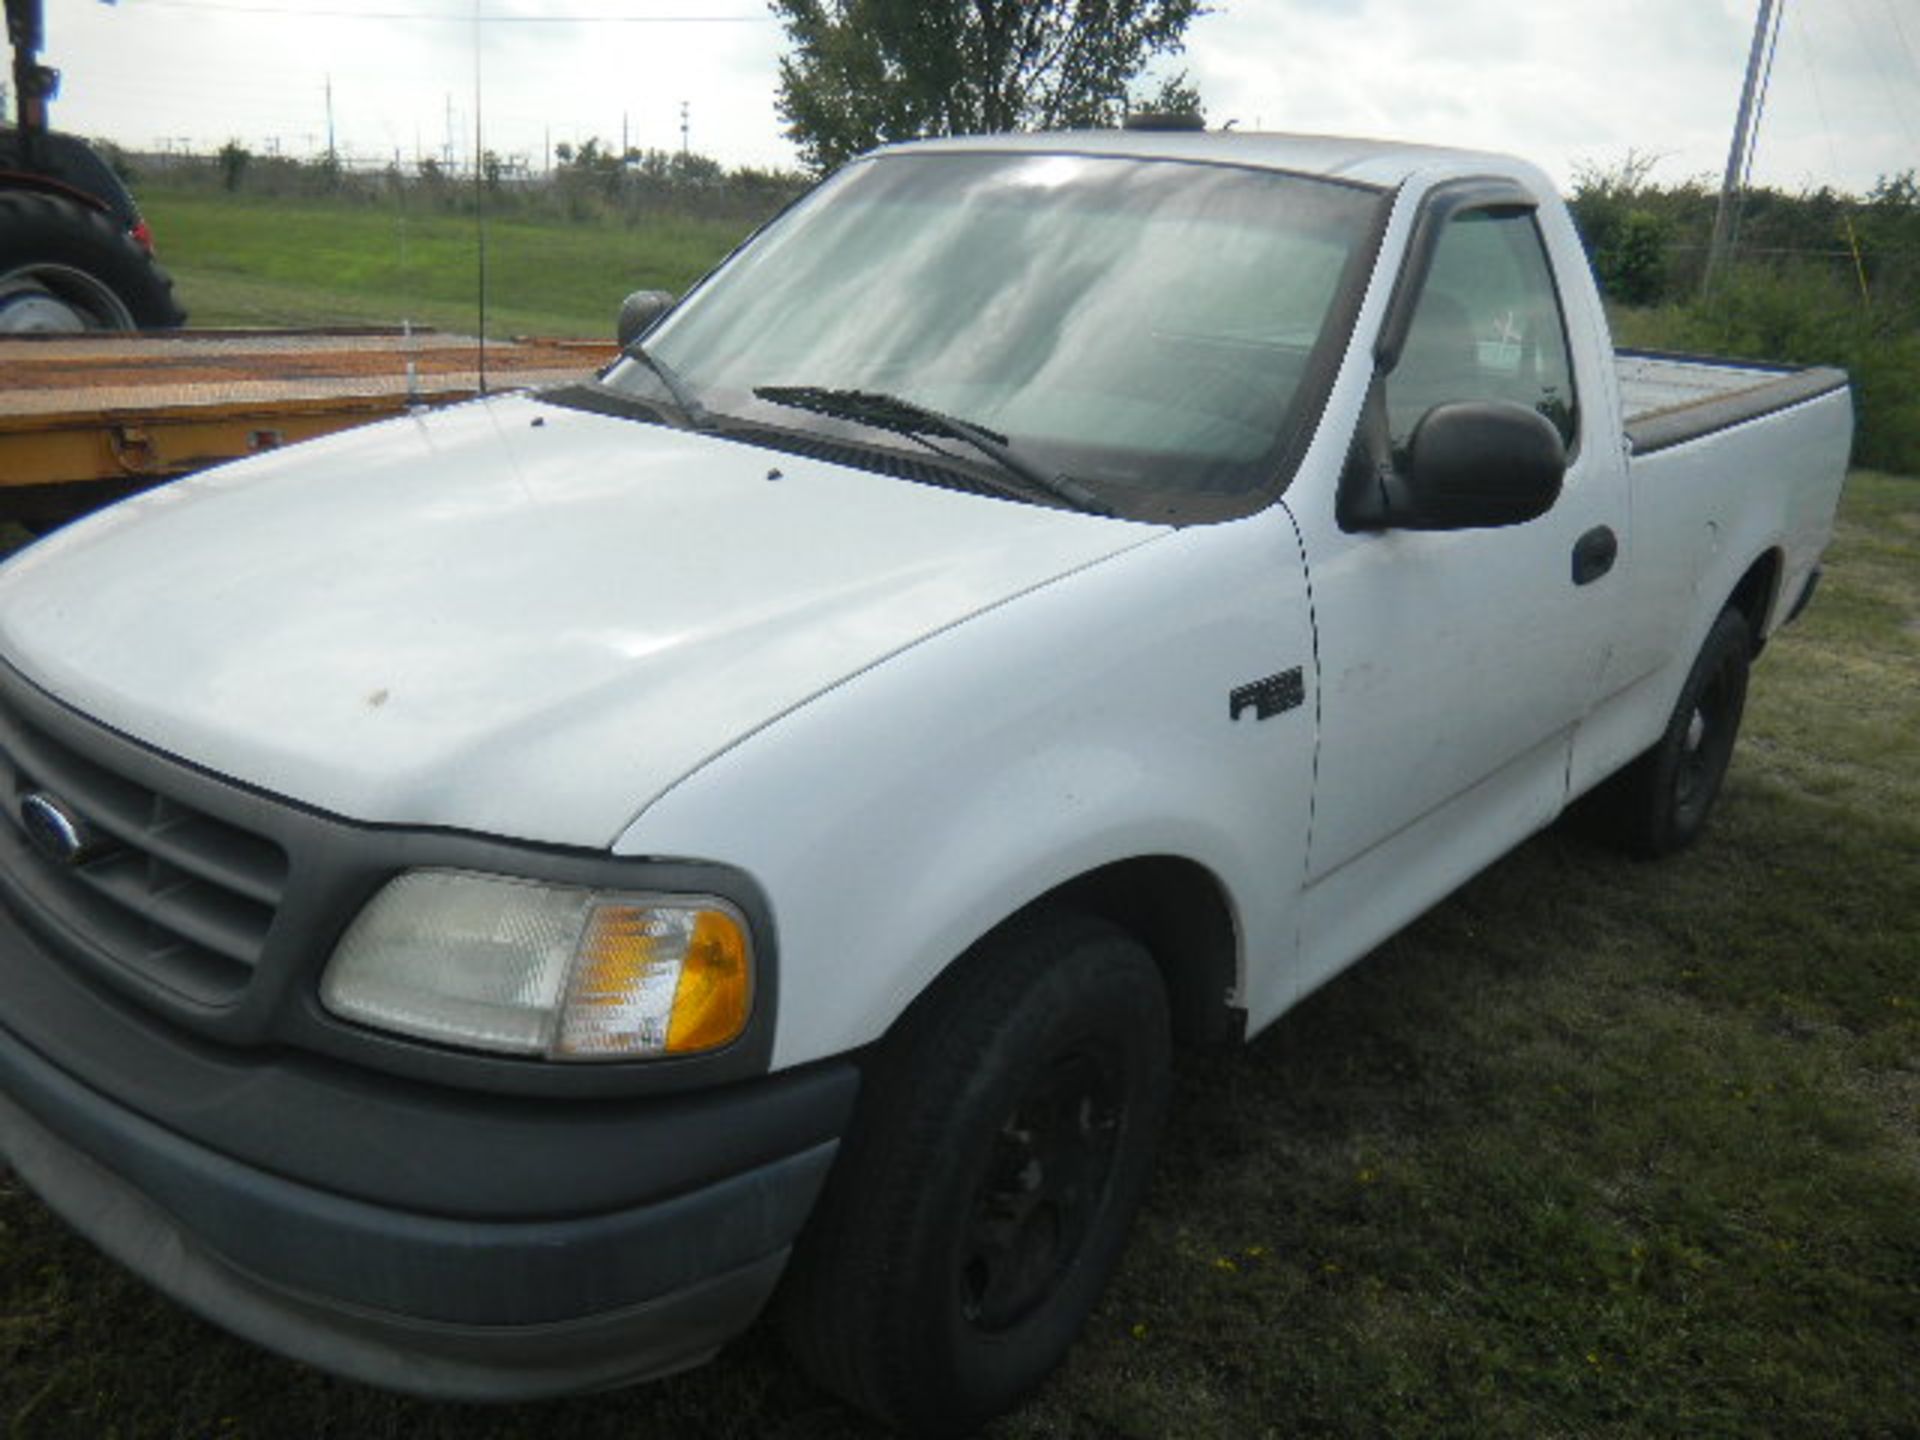 2003 Ford F150 XL Pickup - Asset I.D. #475 - Last of Vin (CA90379) - Animal Control Vehicle